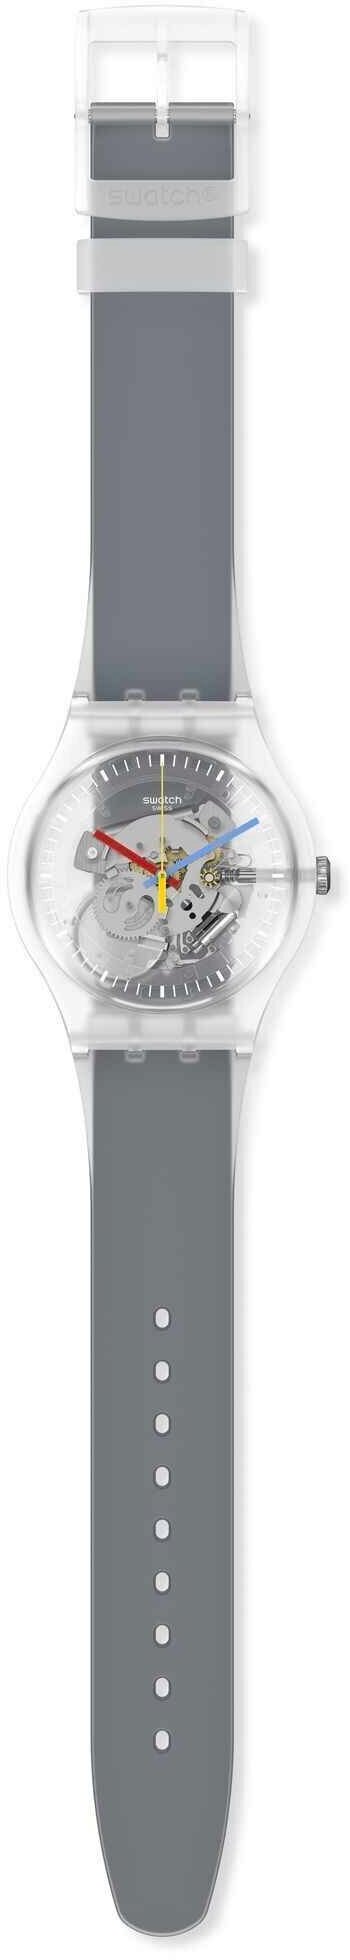 Наручные часы swatch CLEARLY BLACK STRIPED SUOK157, серебряный